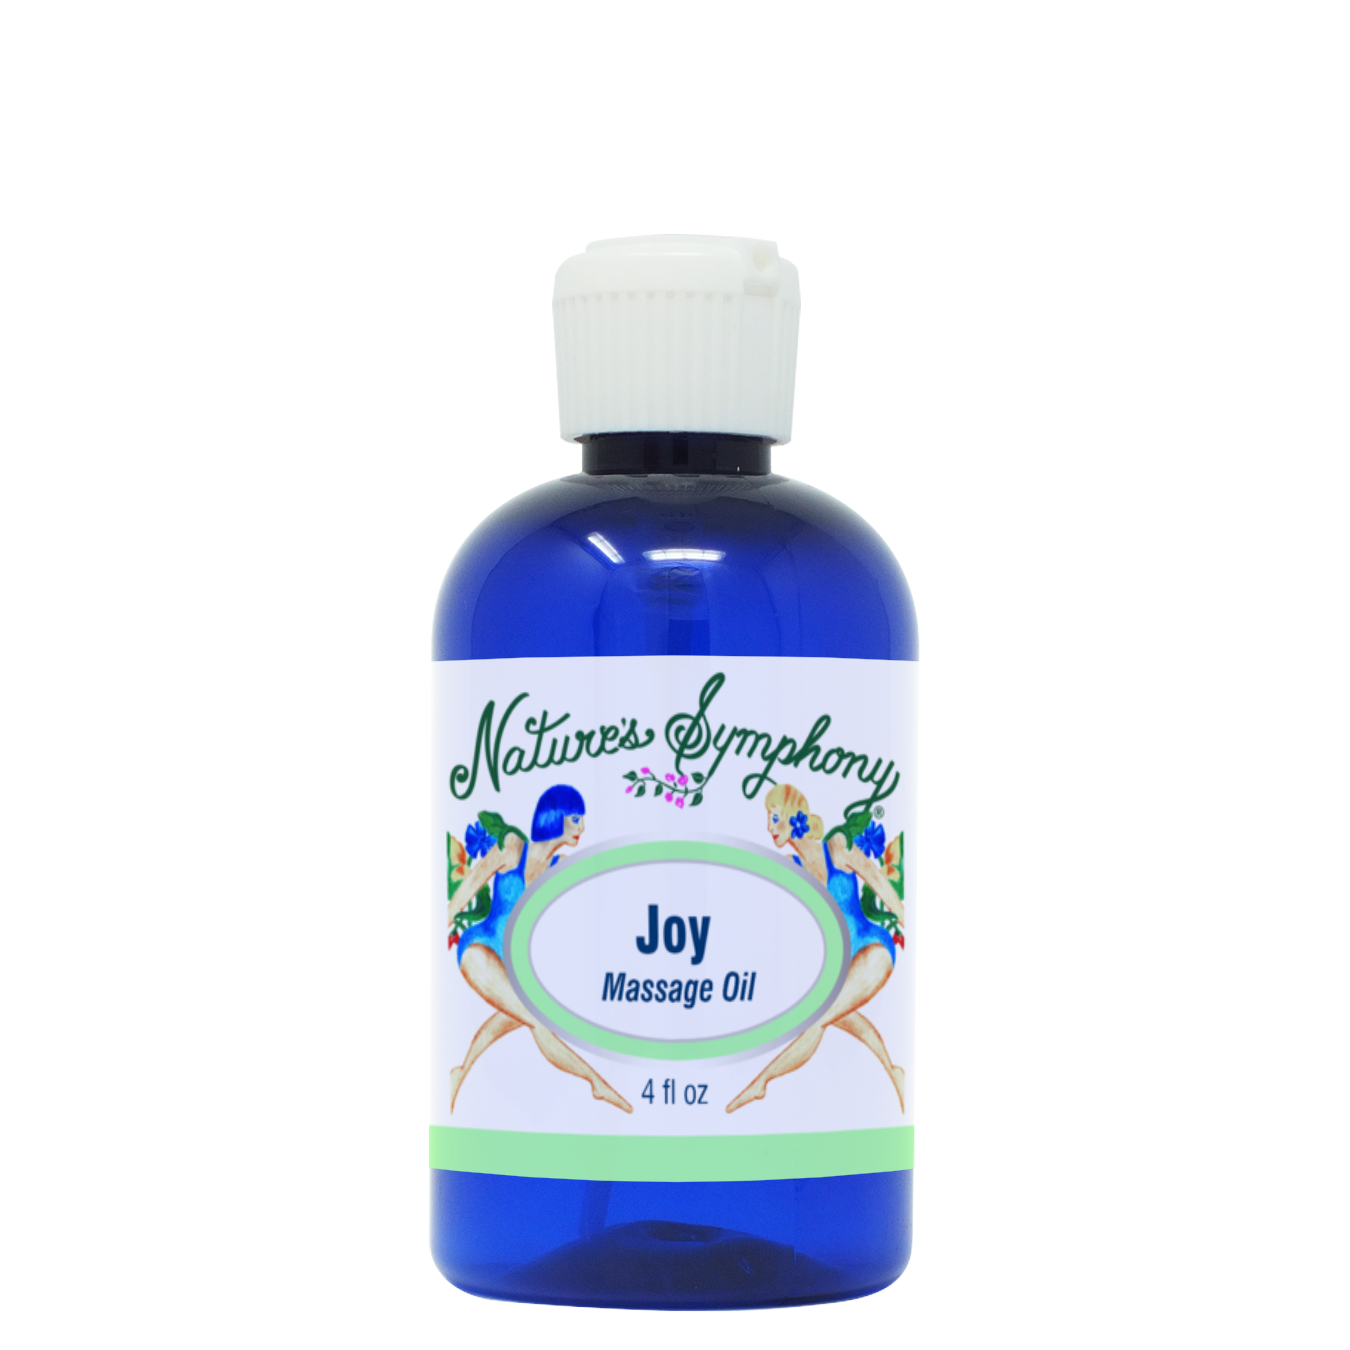 Joy, Massage Oil - 4 fl. oz. (118ml)